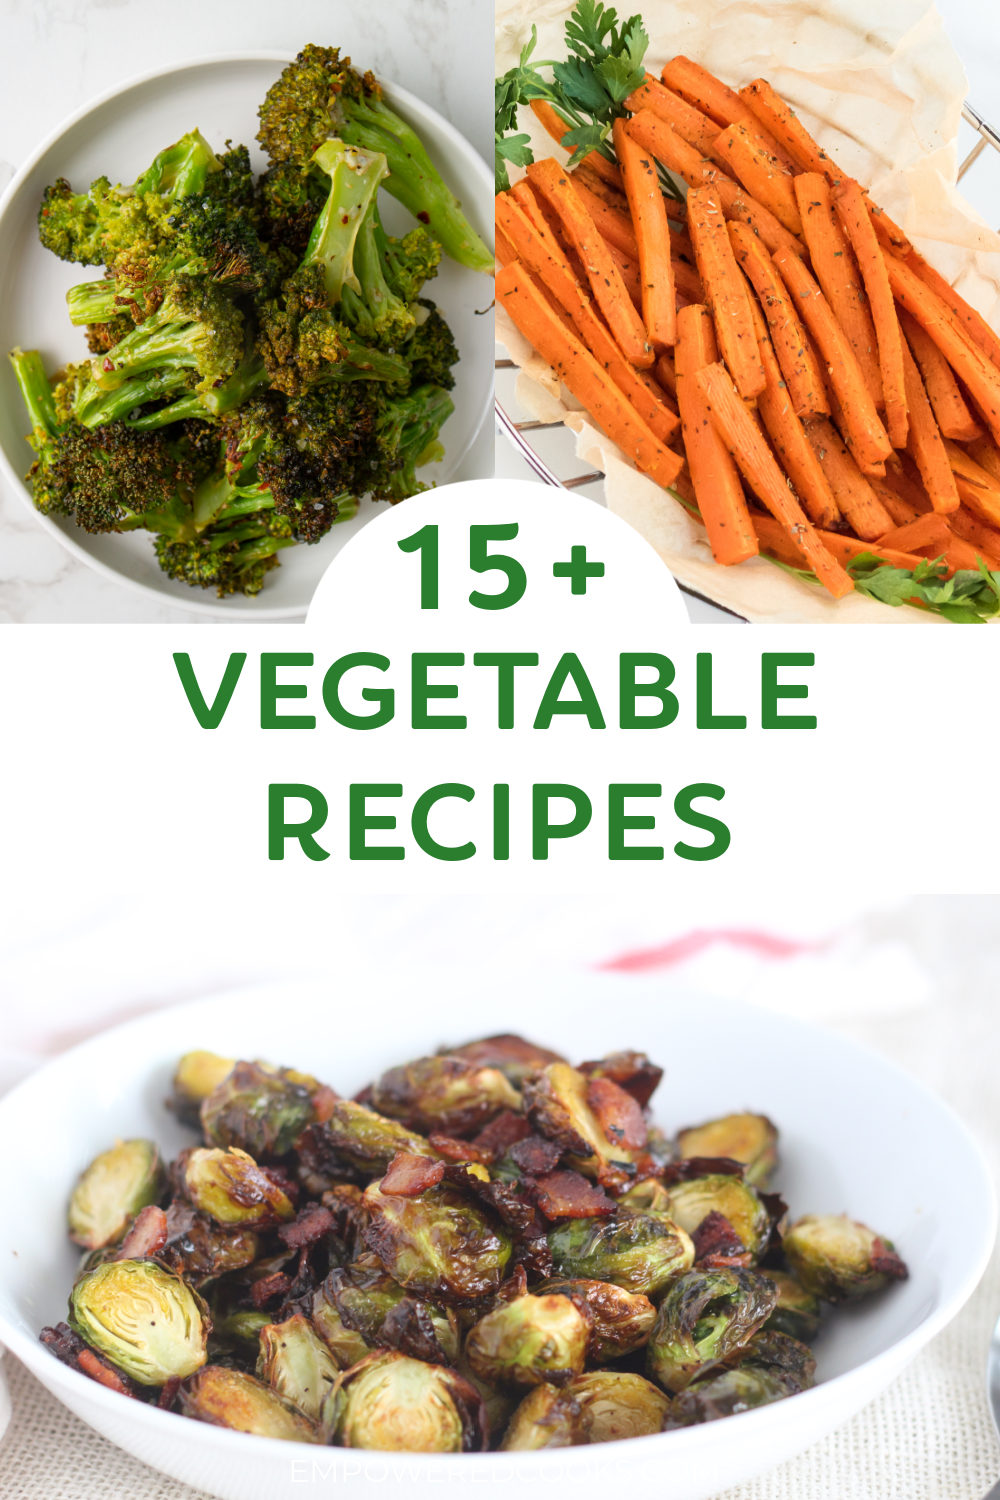 15+ vegetable recipes